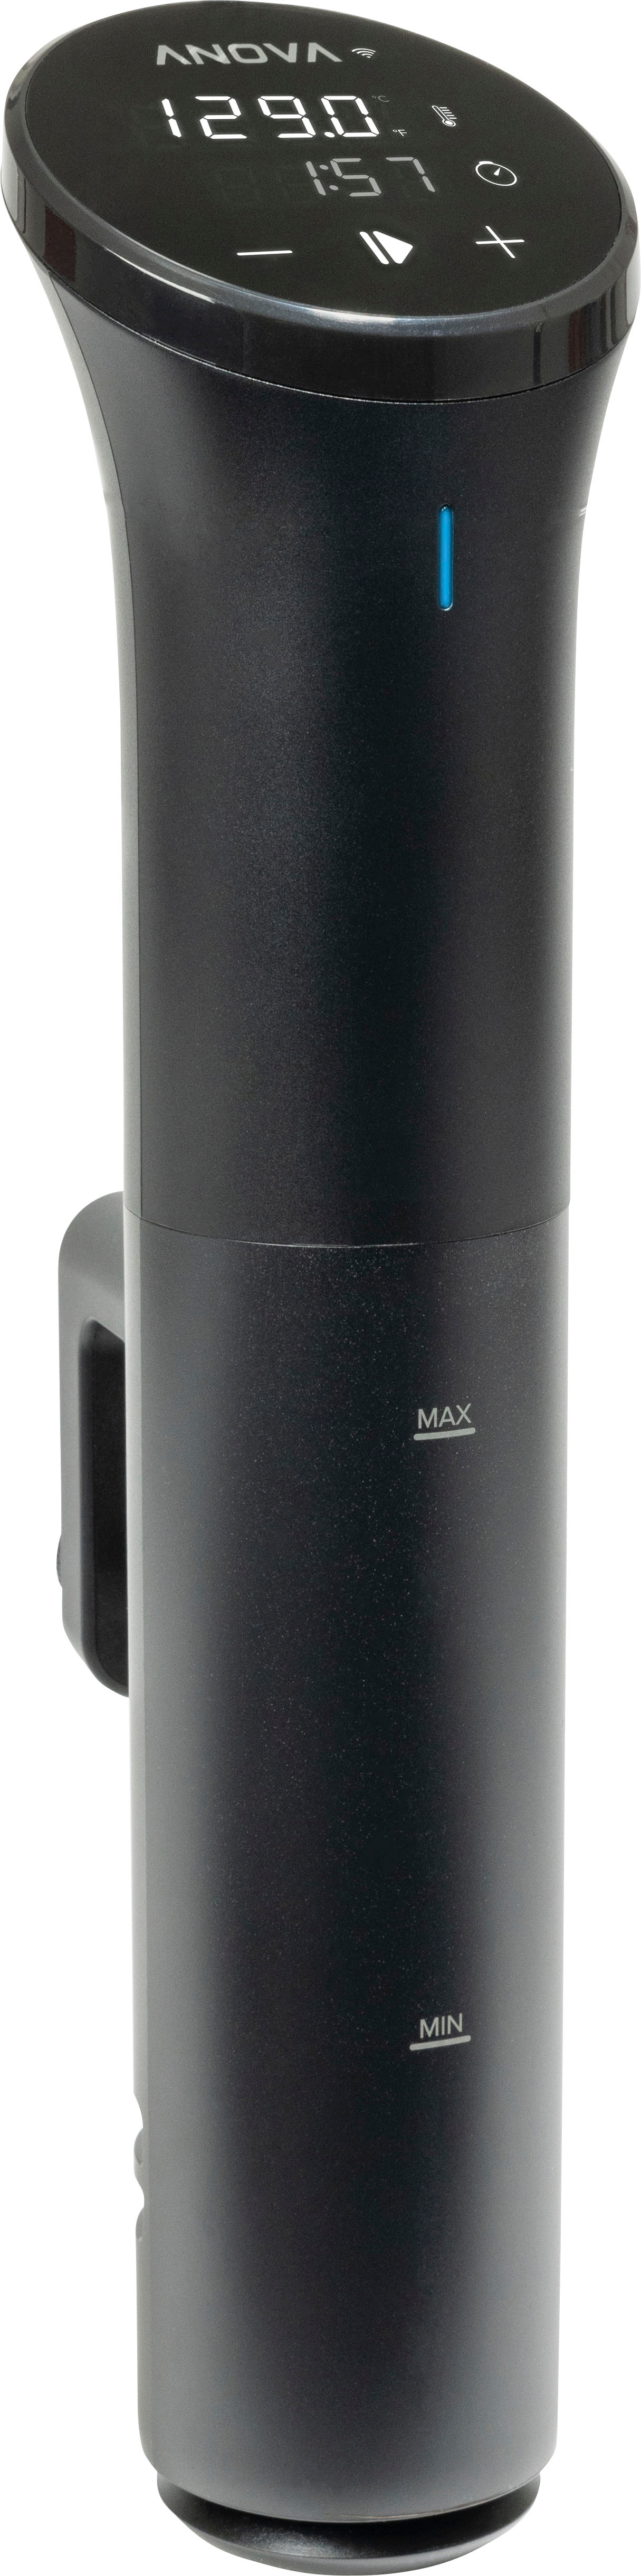 ANOVA Precision Cooker Nano (WiFi) Black Sous Vide with Anova App  AN400-US00 - The Home Depot